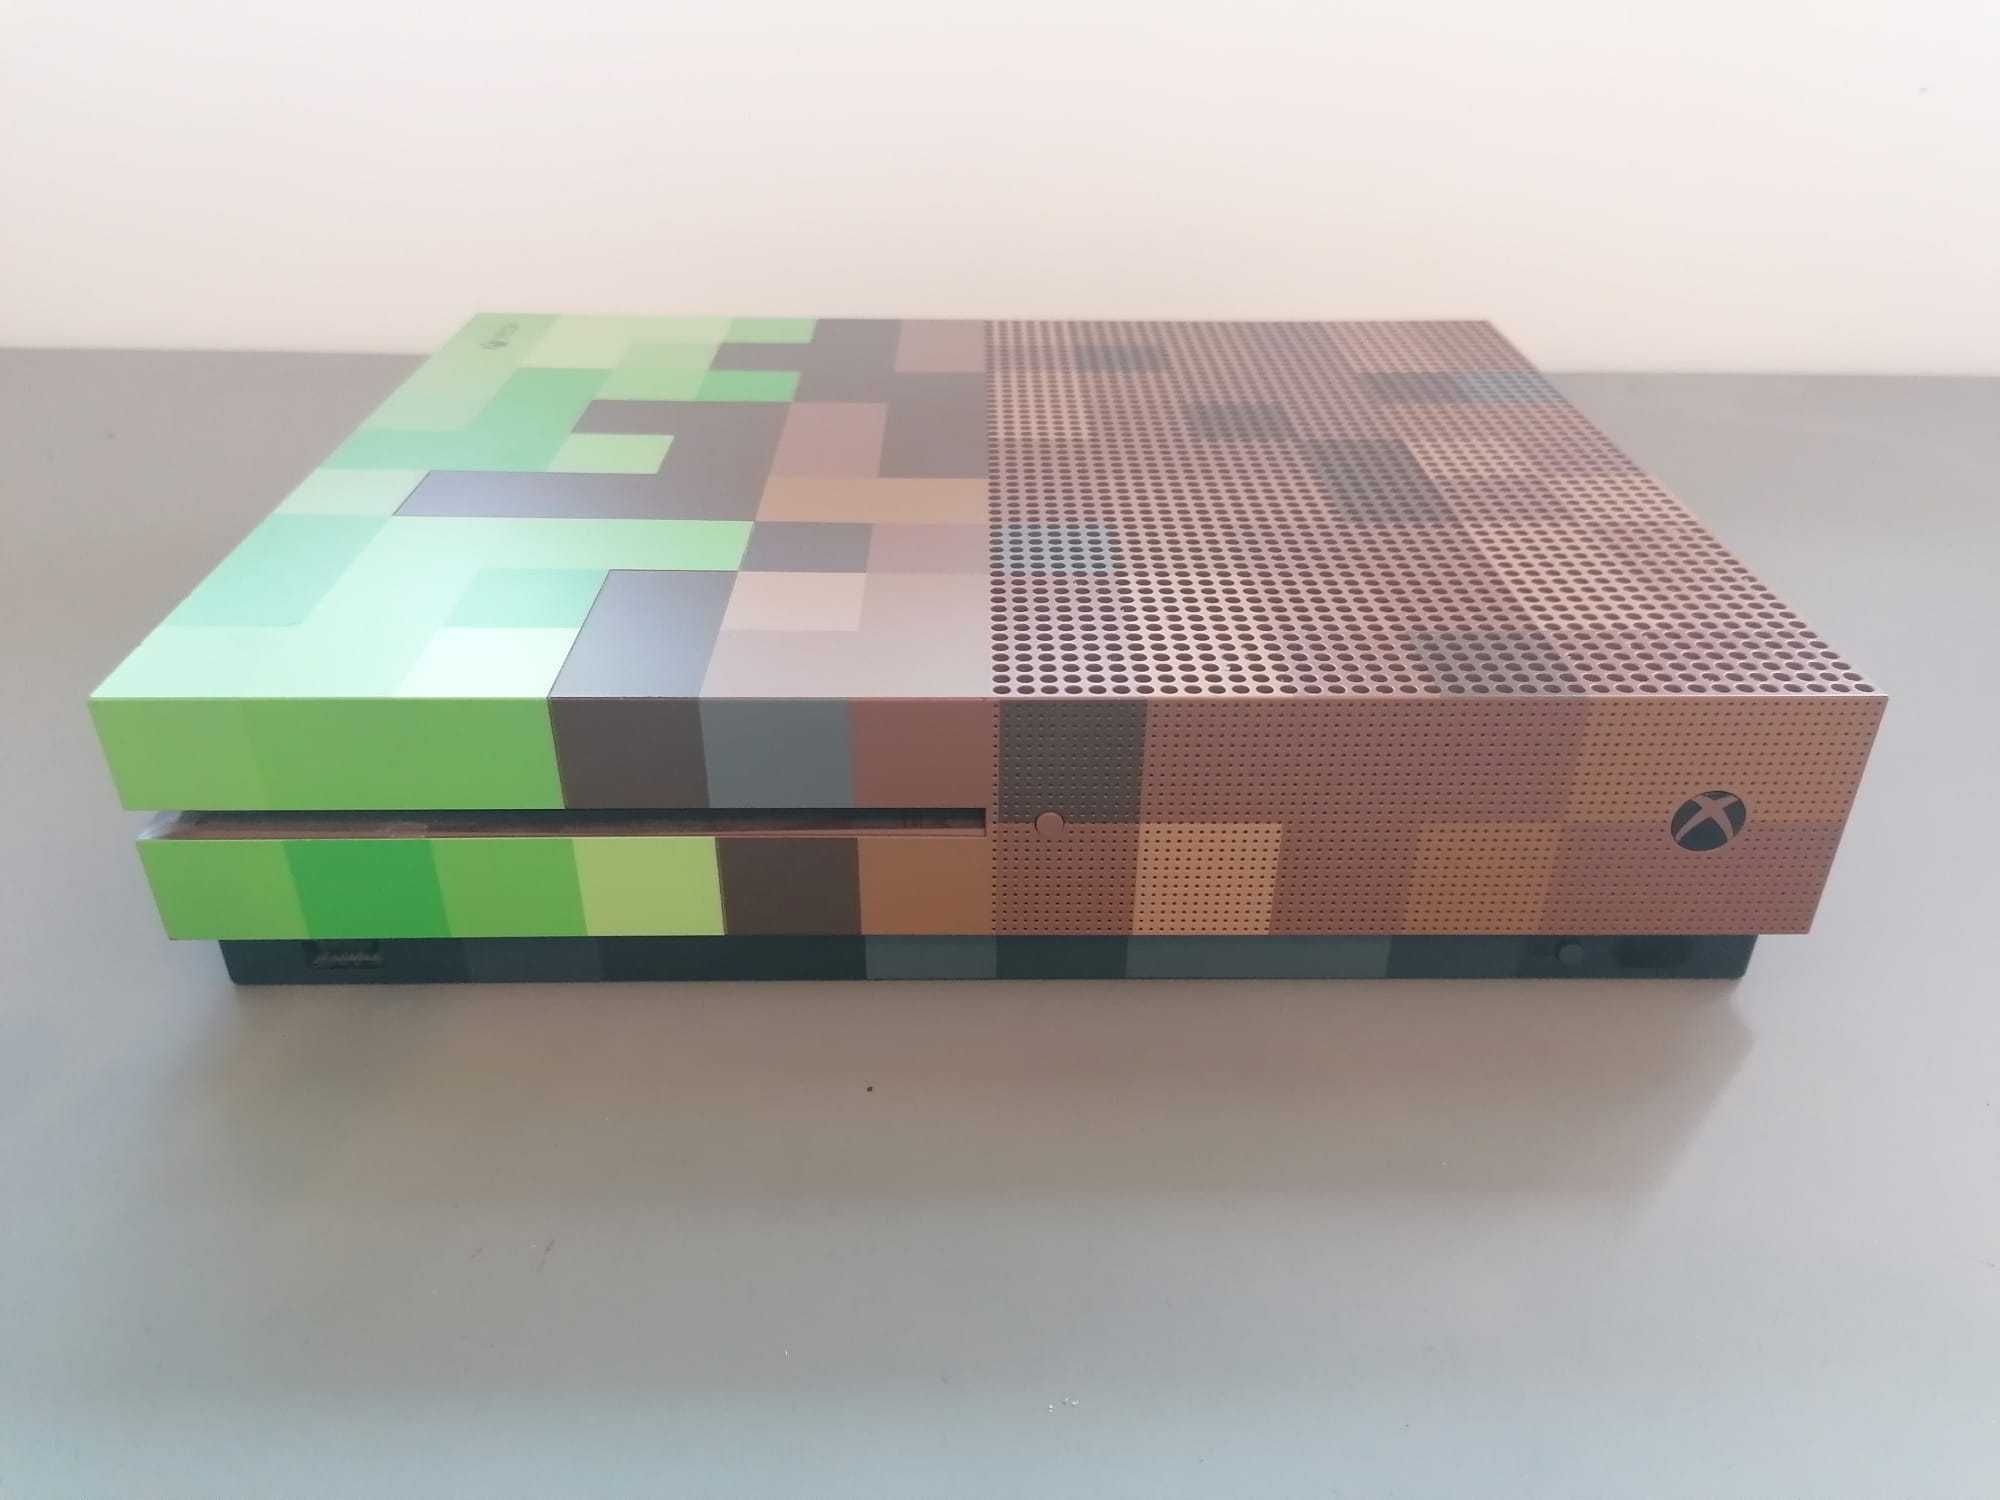 Xbox One S Minecraft Edition ca nou